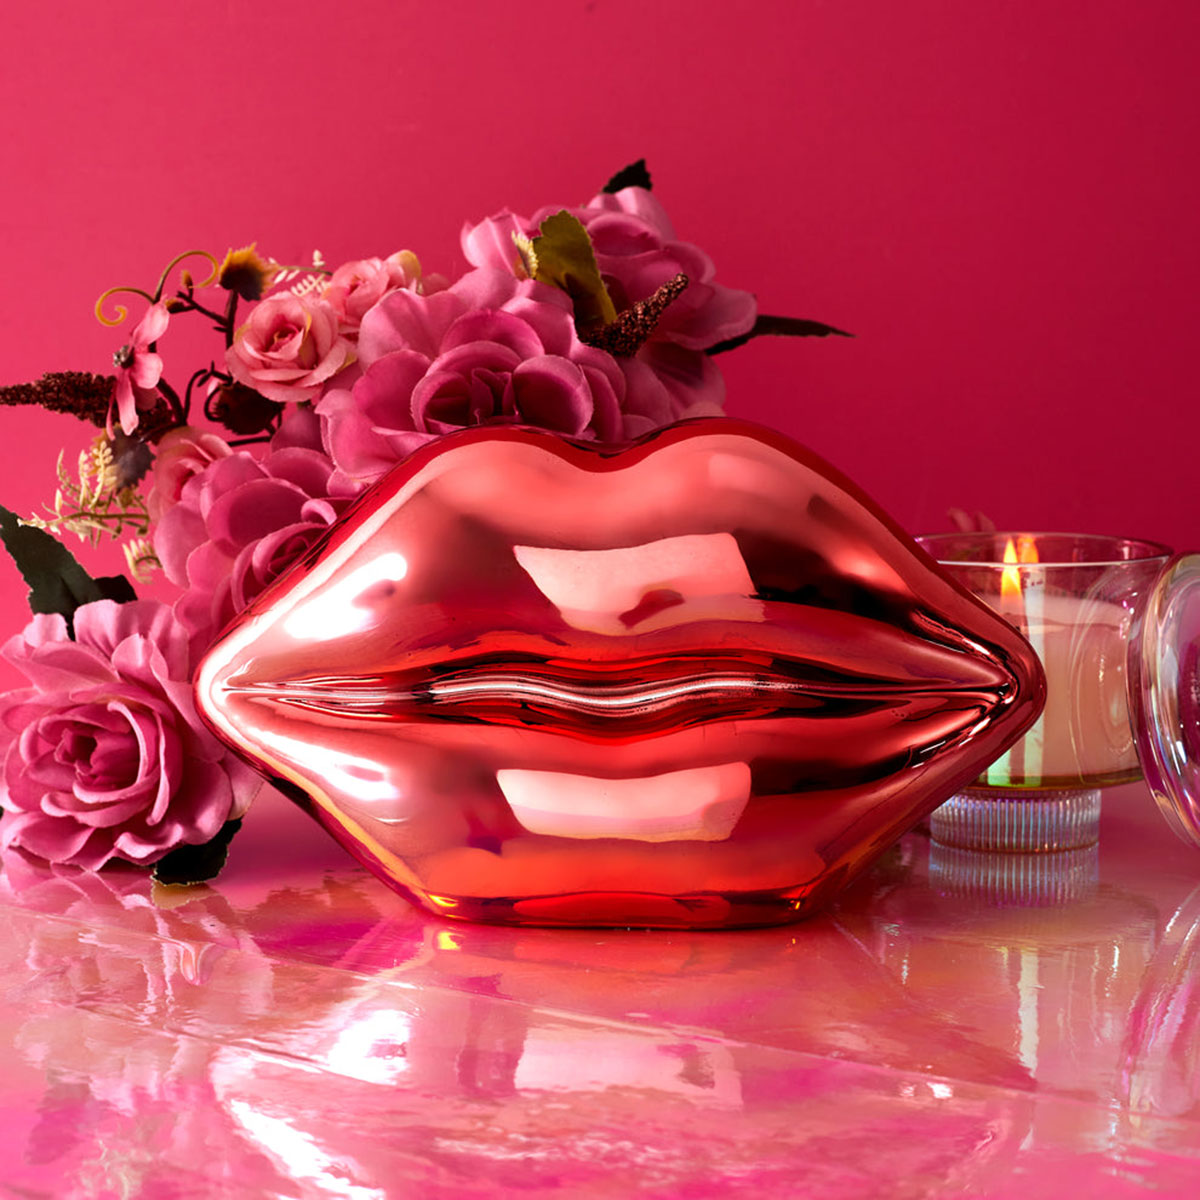 Tirelire Kiss en cramique rose